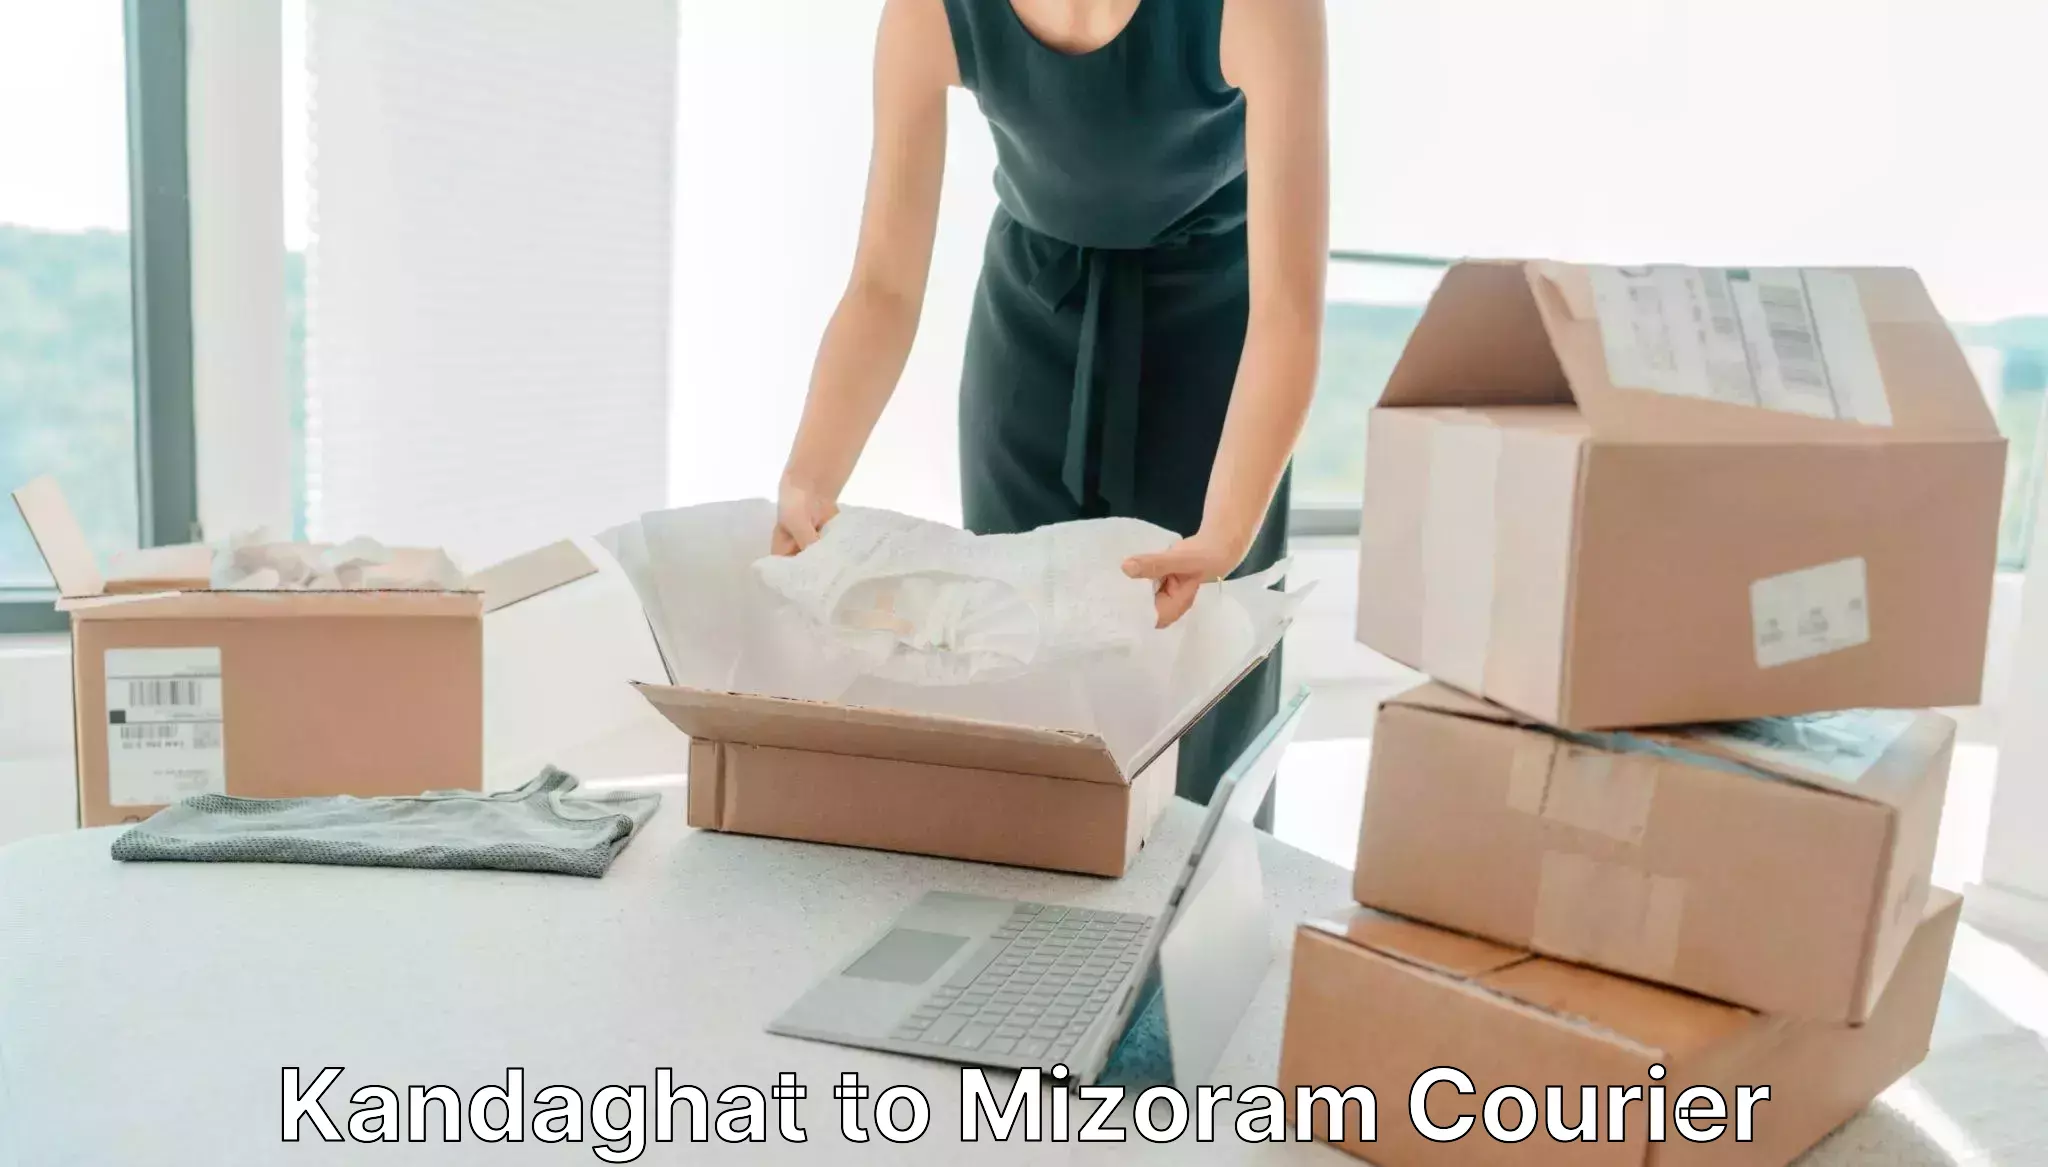 Efficient order fulfillment in Kandaghat to Mizoram